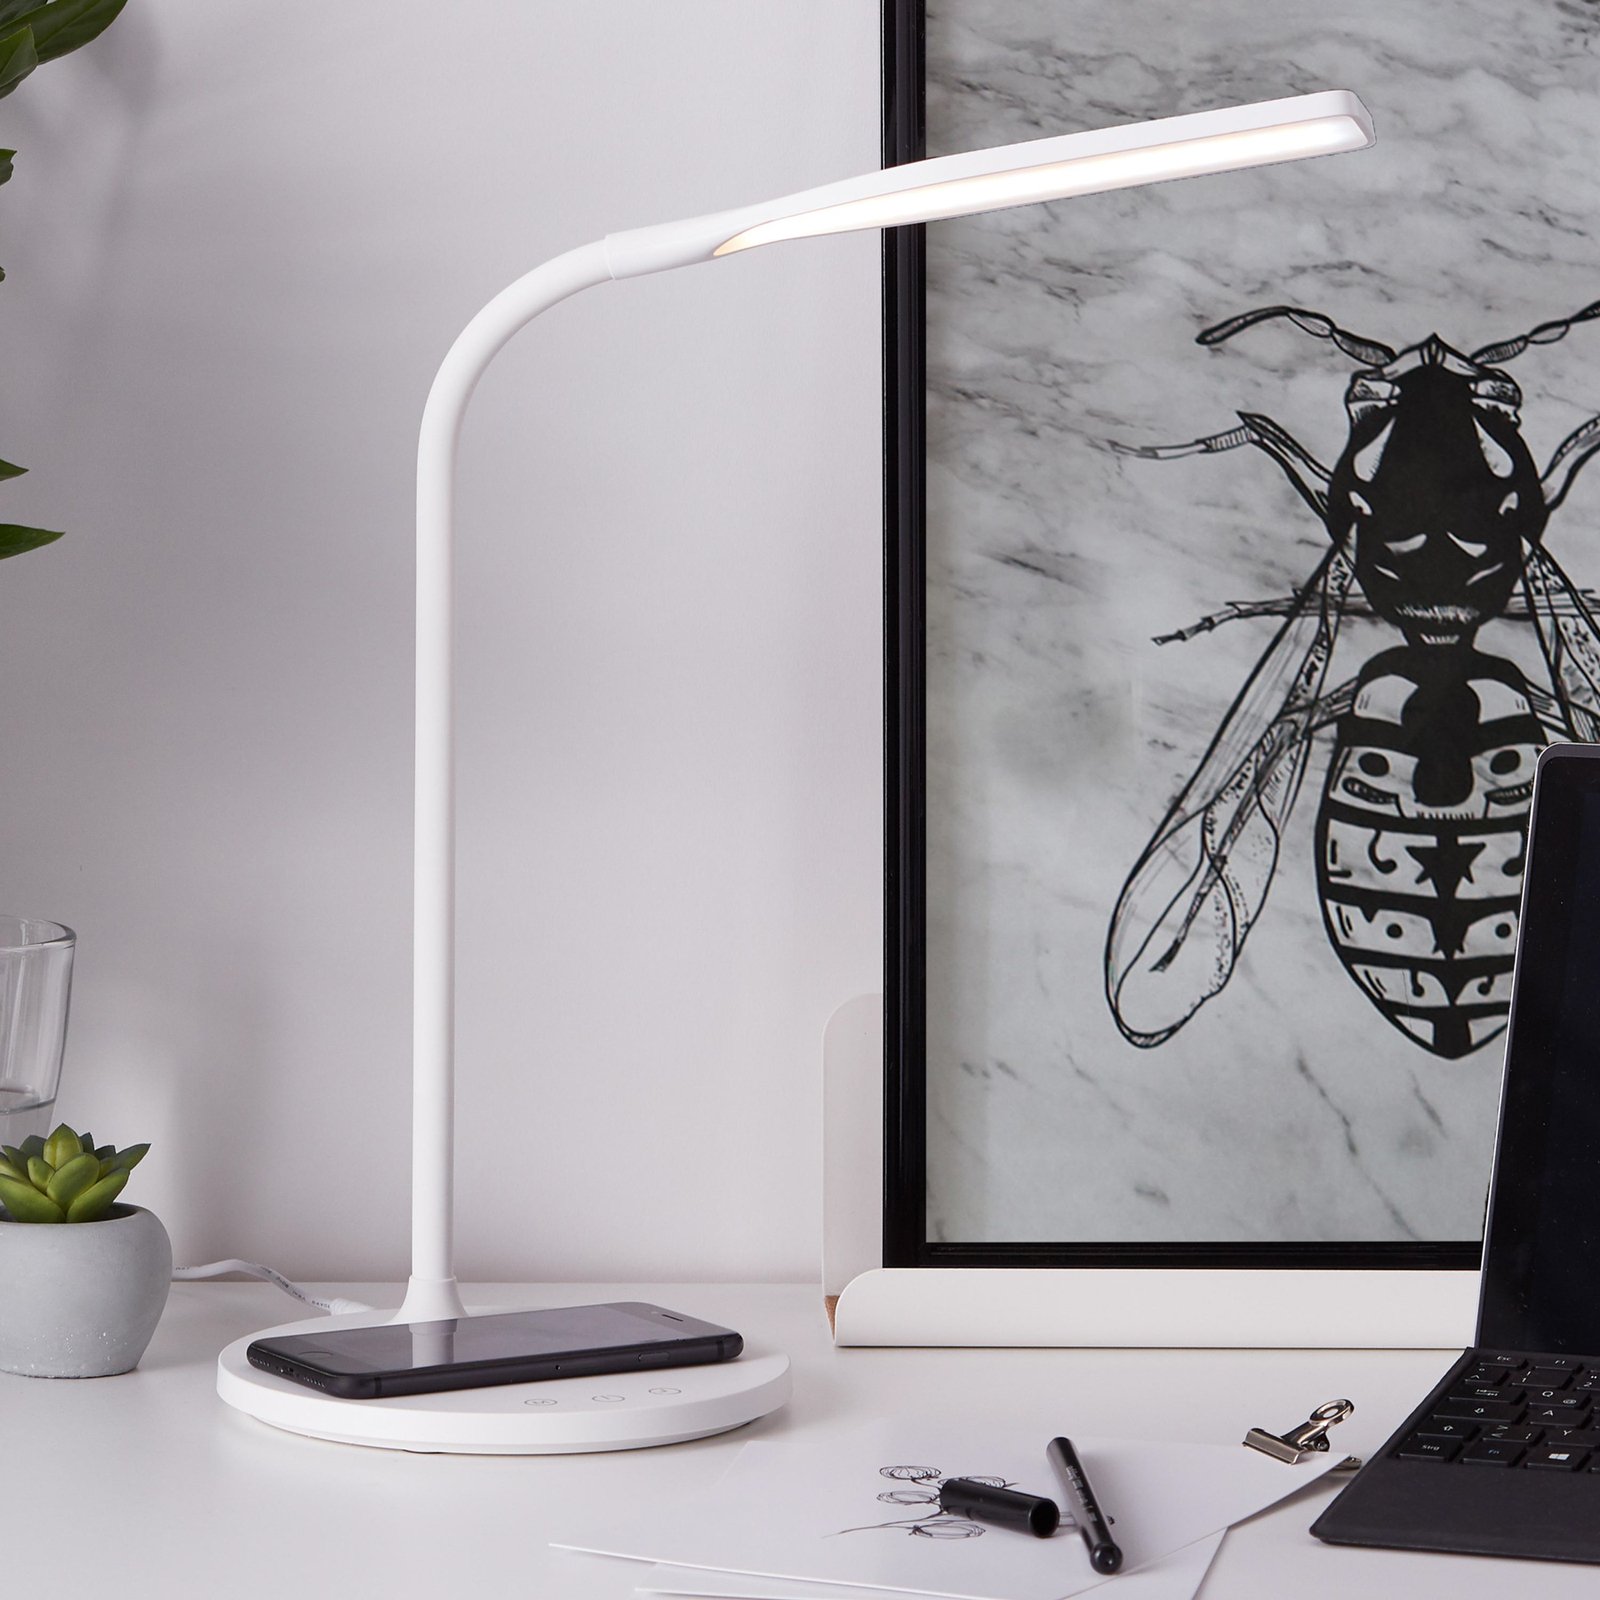 Joni LED bureaulamp, wit, hoogte 34 cm, CCT, dimbaar